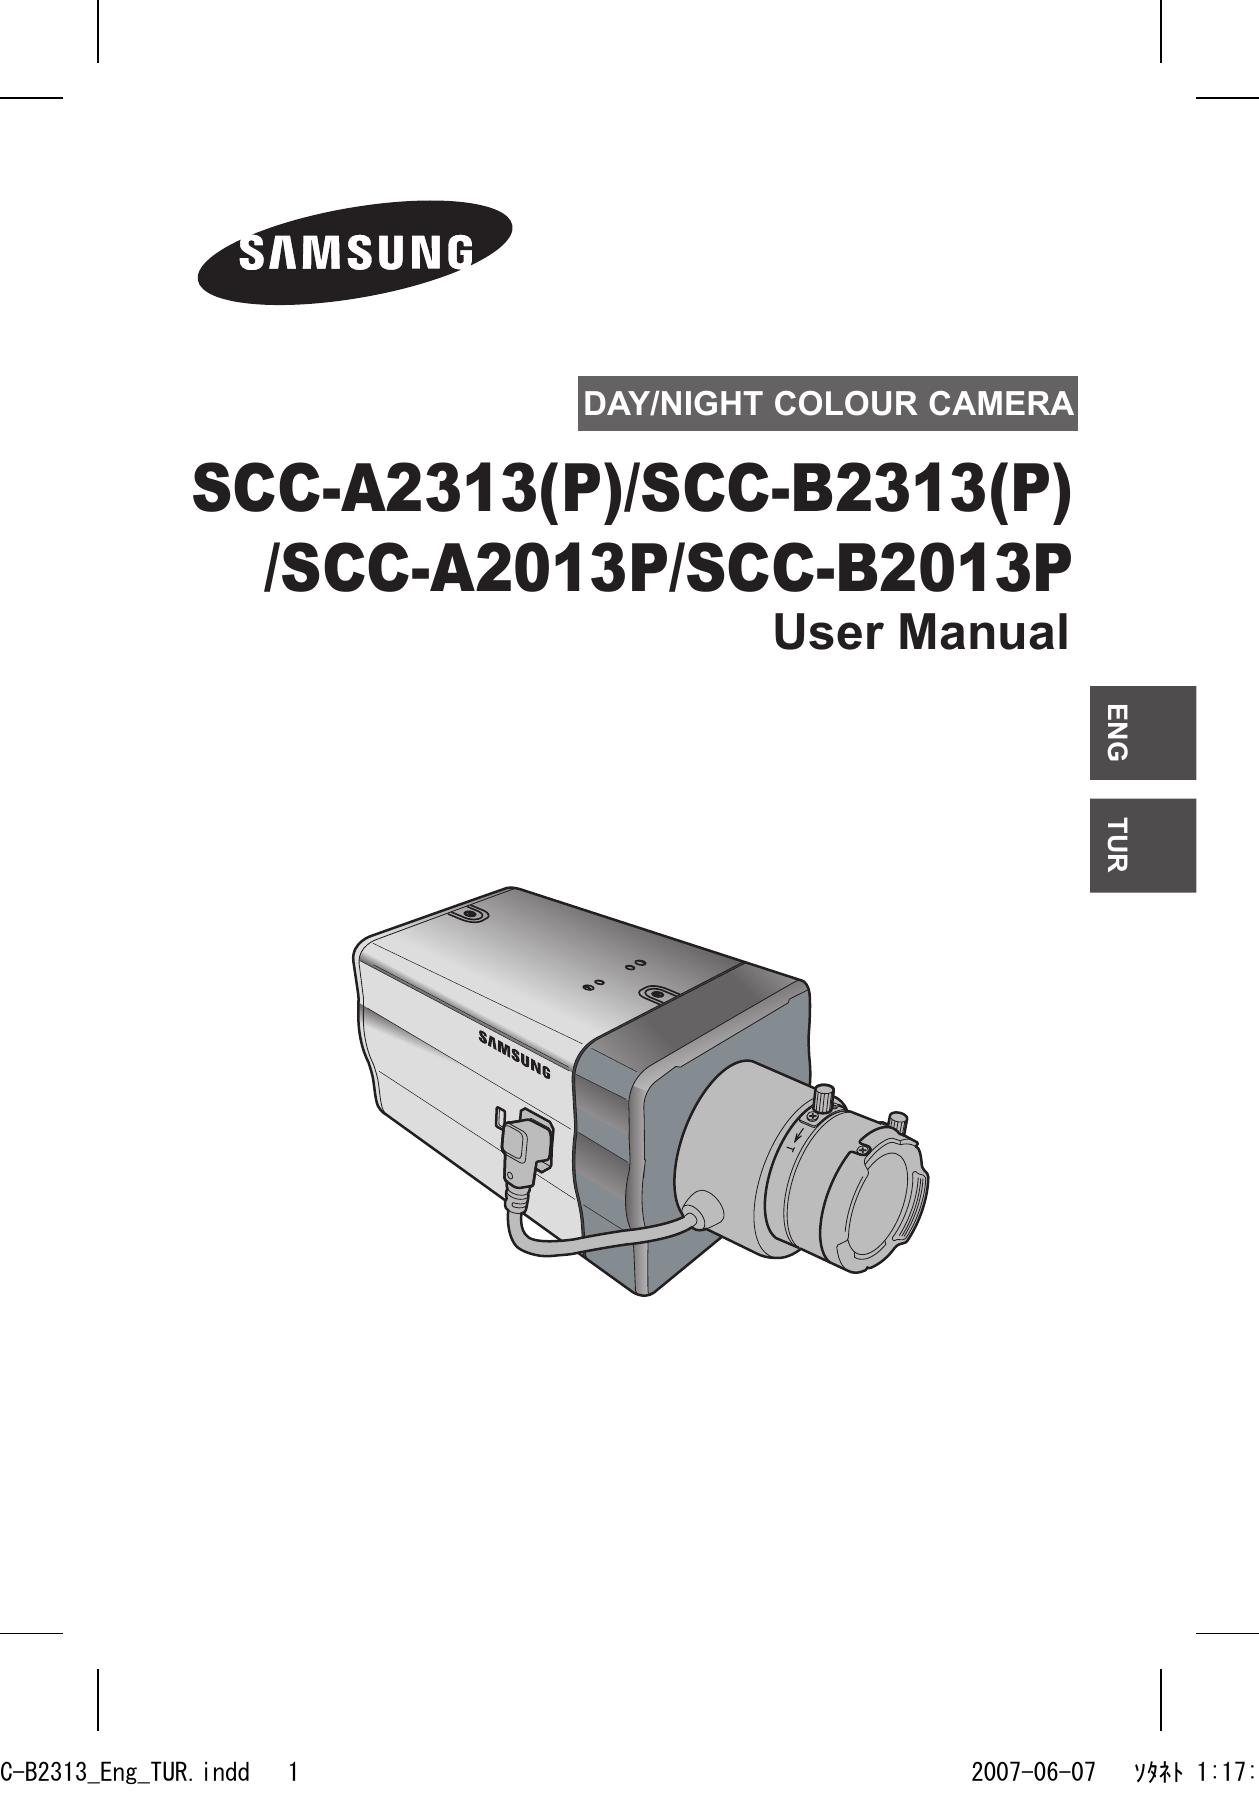 Samsung SCC-A2313(P) Security Camera User Manual